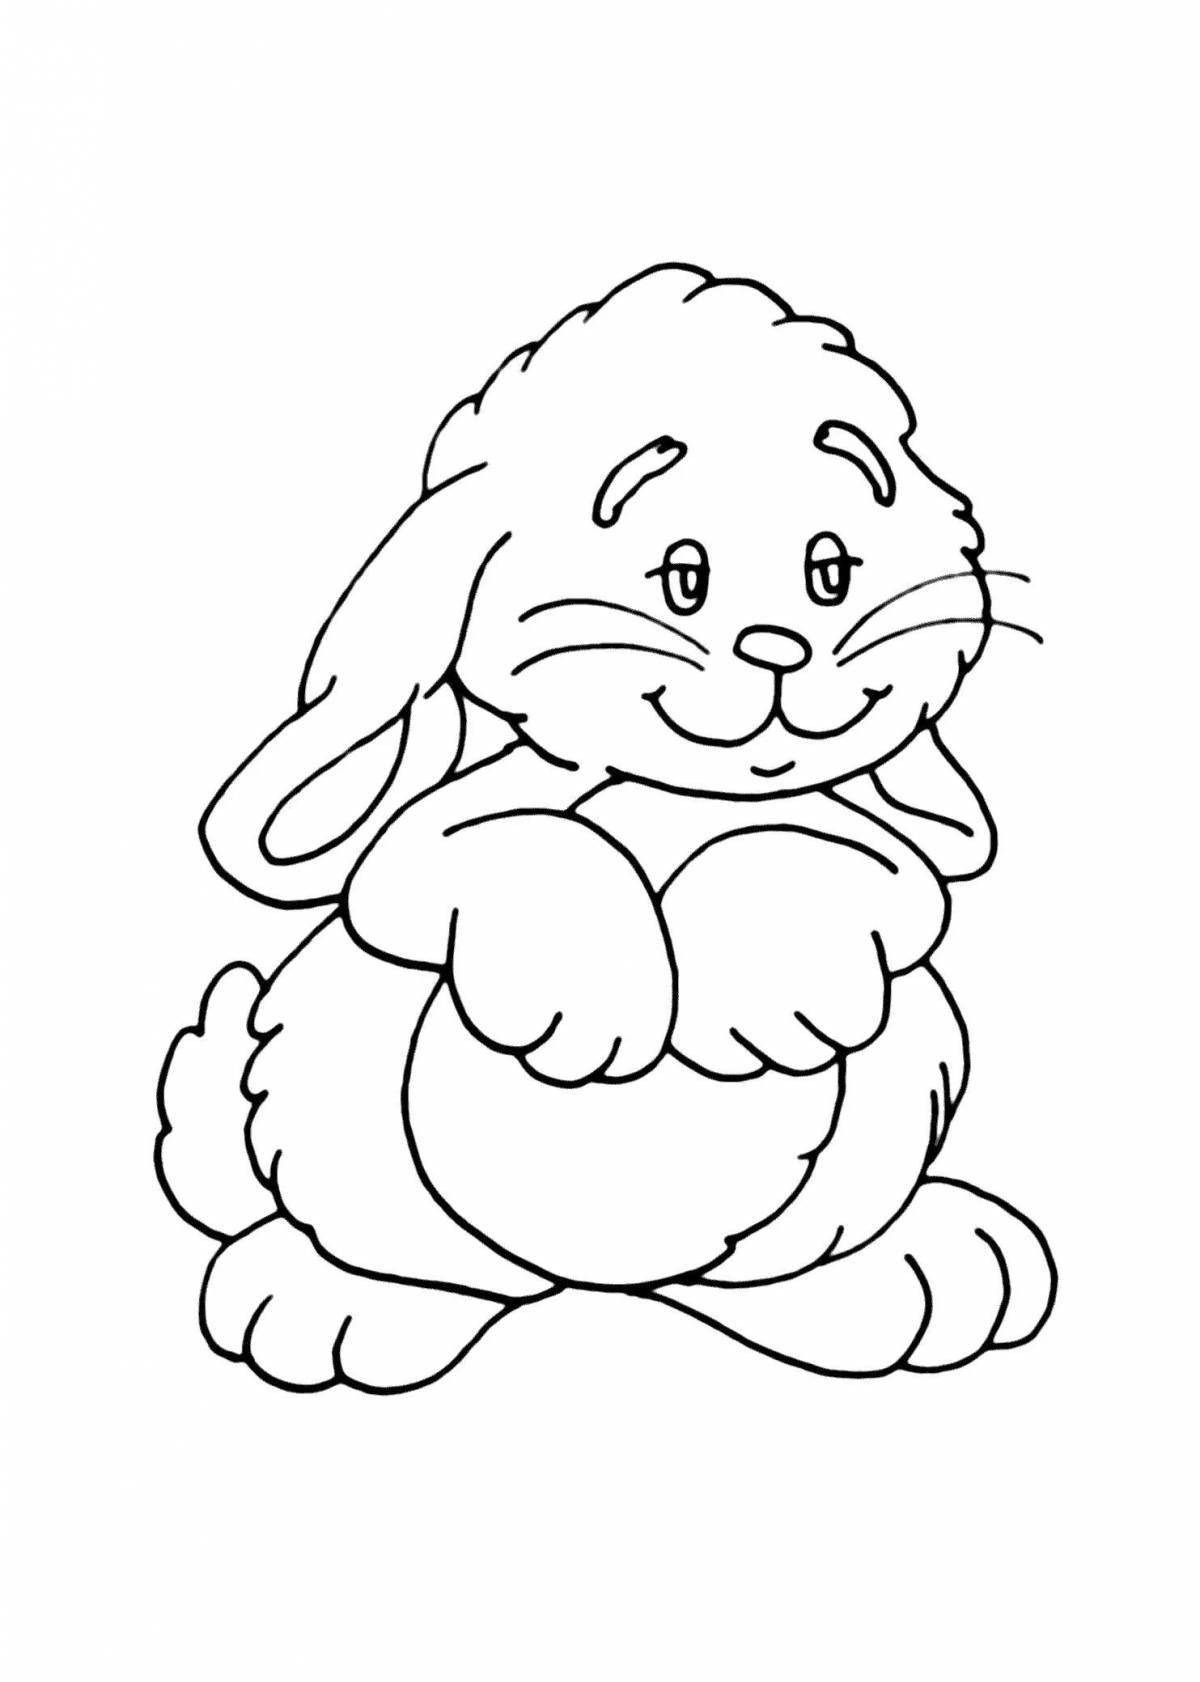 Naughty bunny coloring book